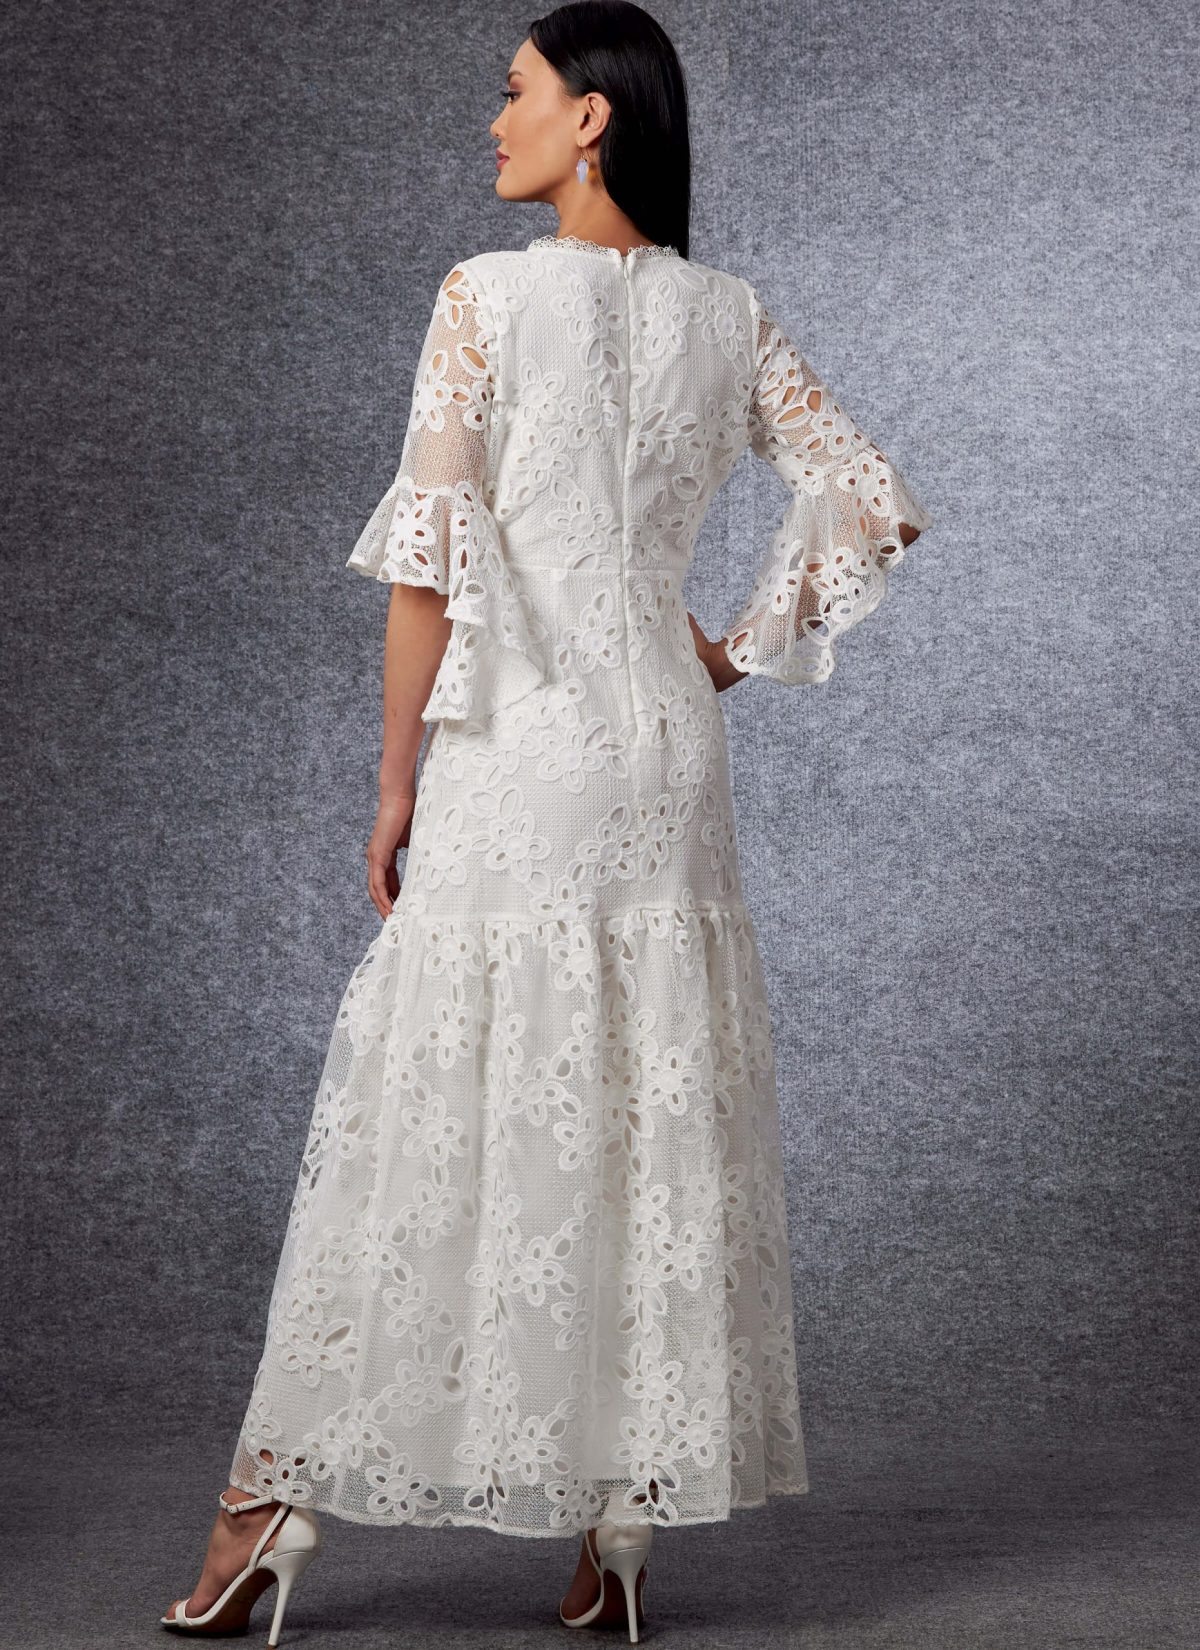 Vogue Patterns V1693 Misses' Special Occasion Dress Badgley Mischka